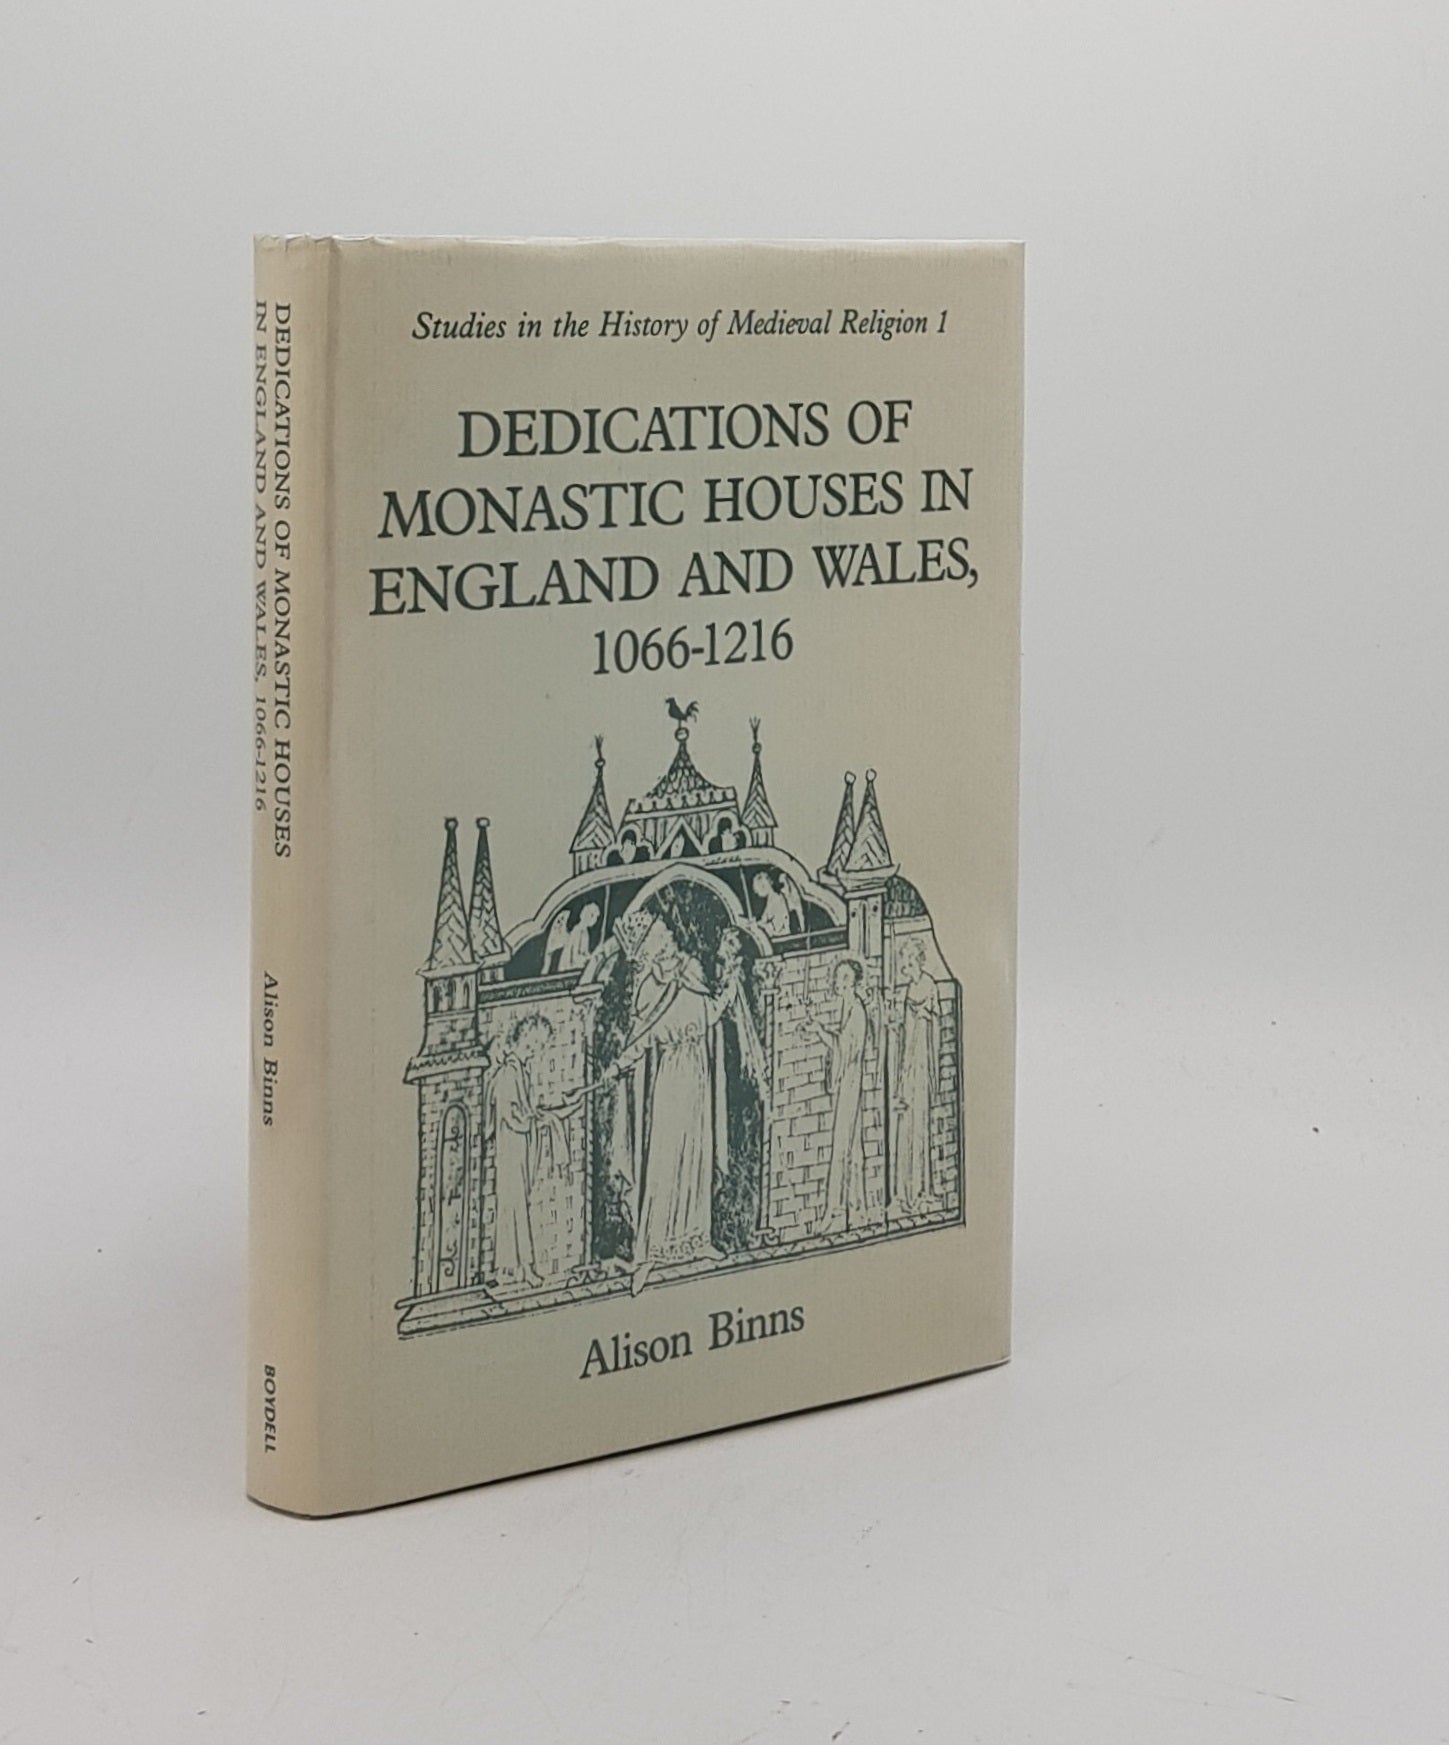 BINNS Alison - Dedications of Monastic Houses in England and Wales 1066-1216 (Studies in the History of Medieval Religion Volume 1)